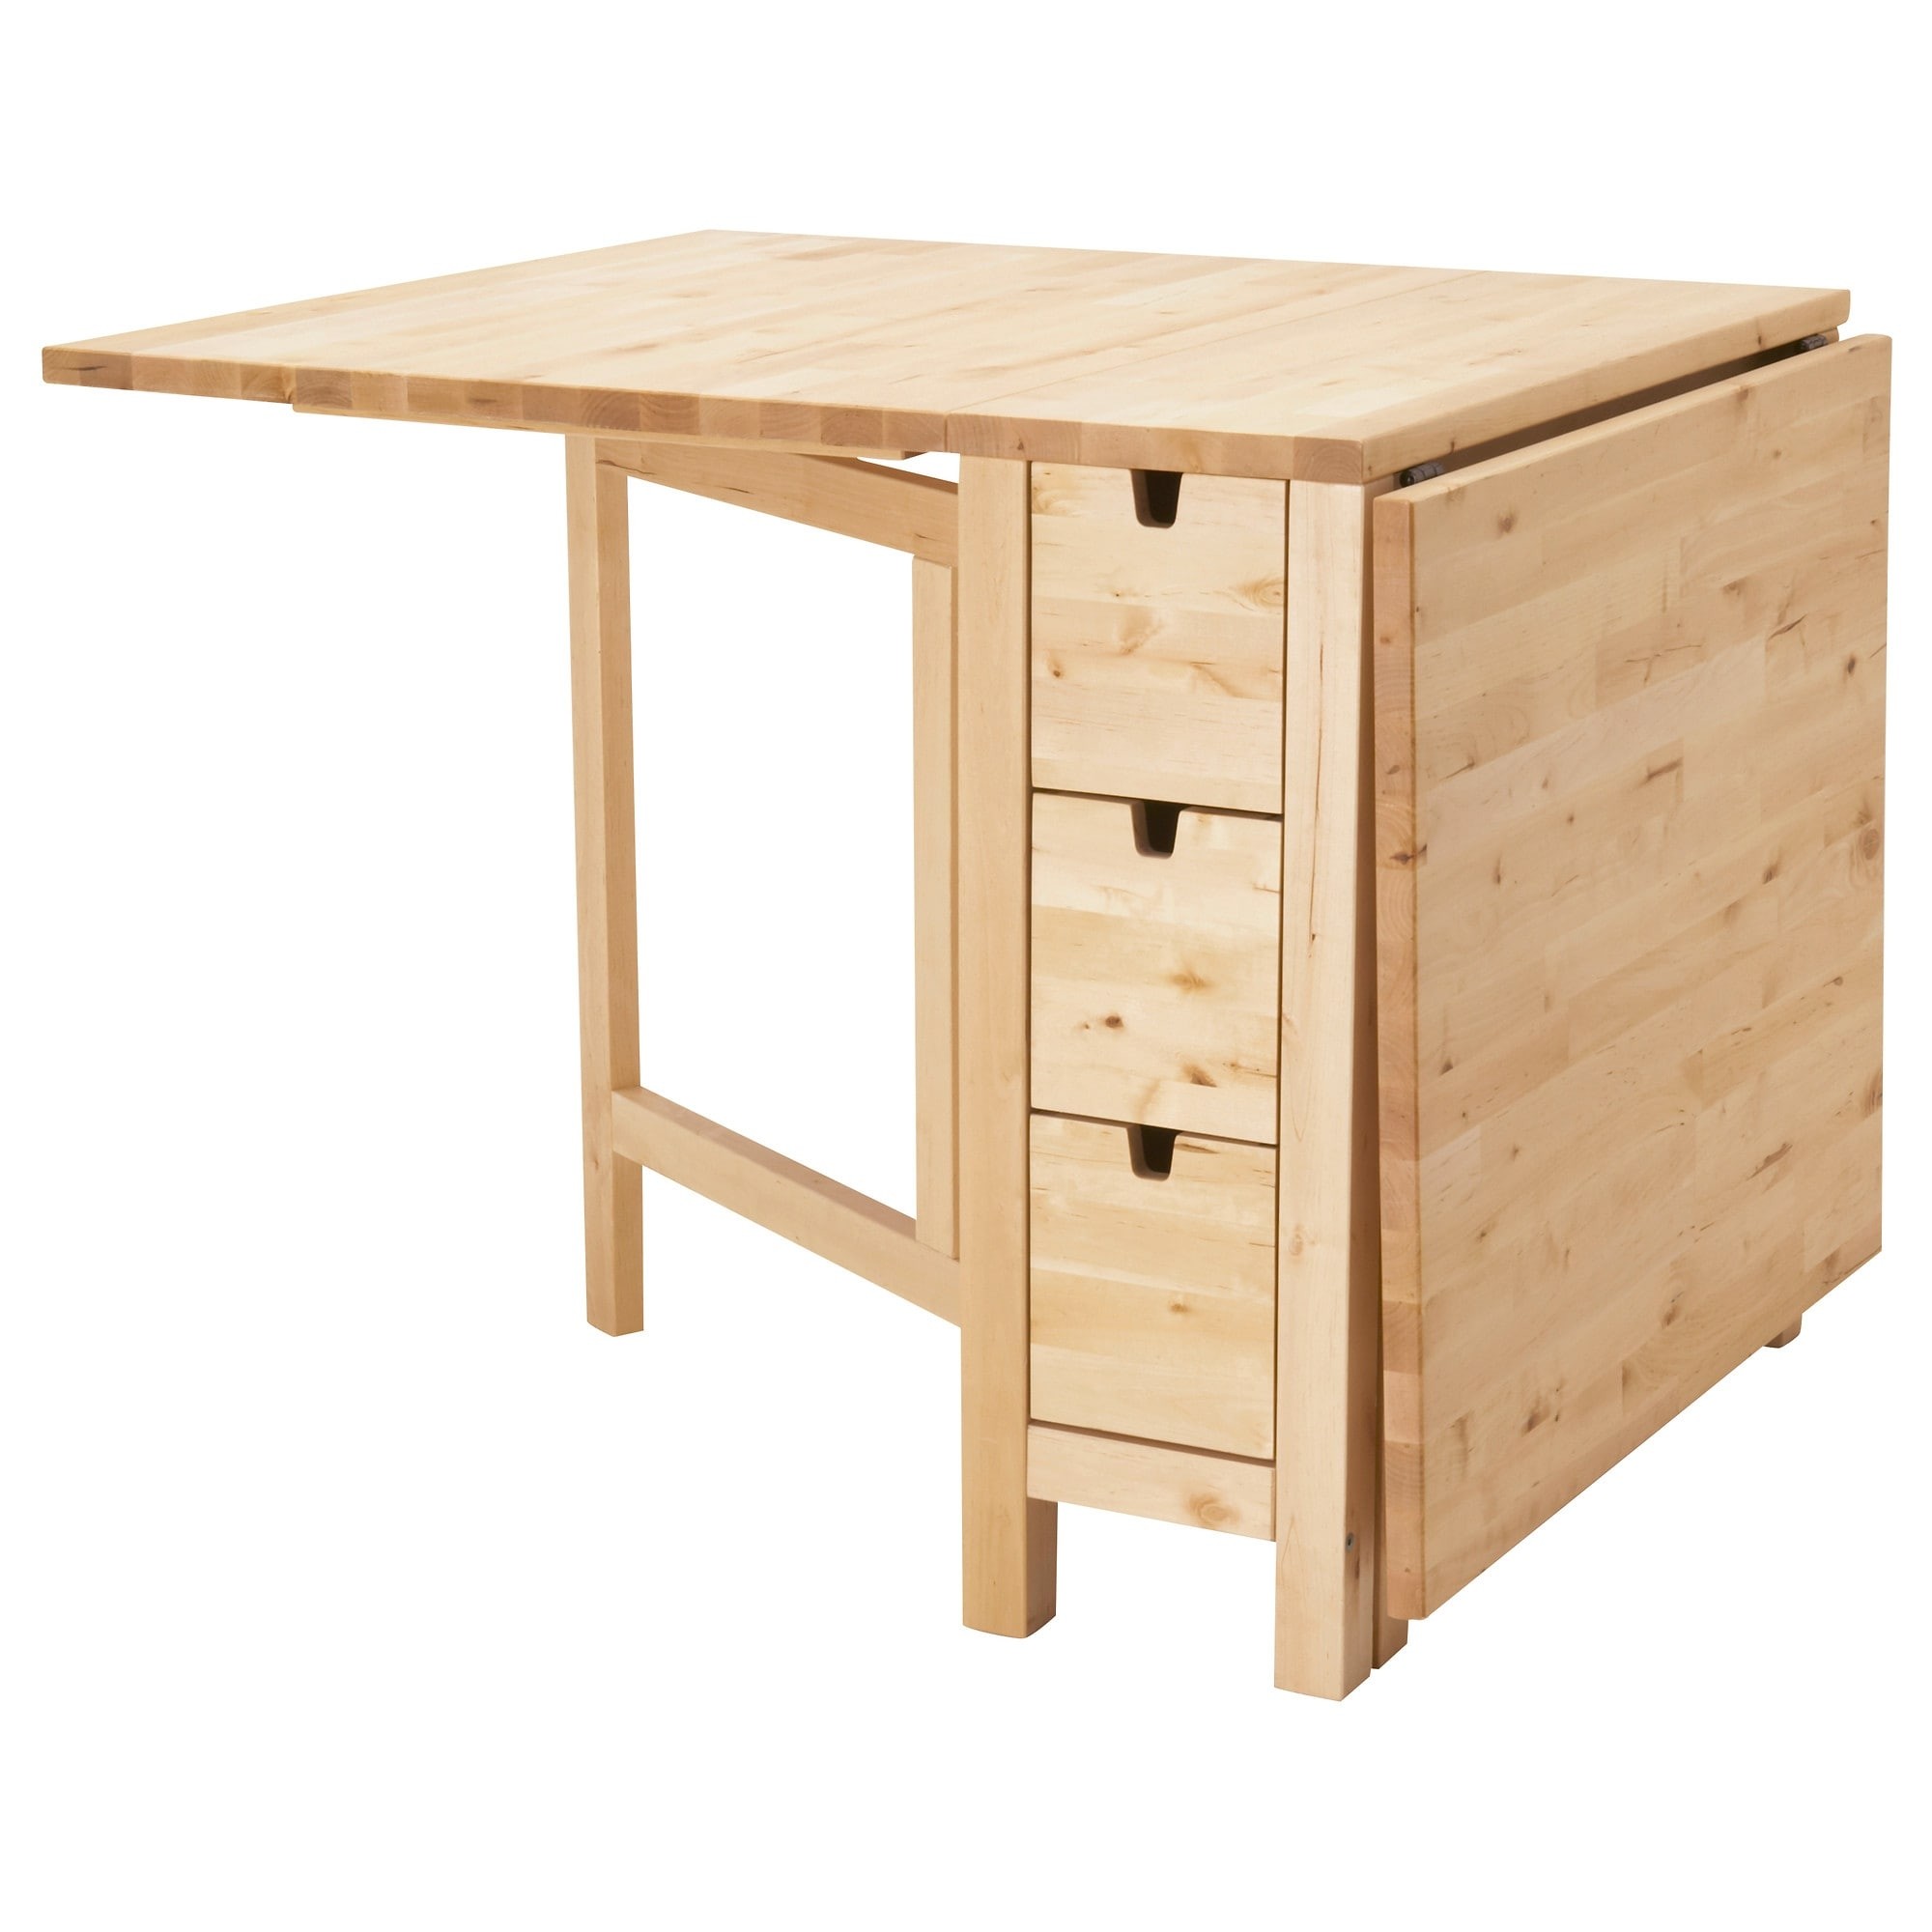 Ikea folding tables